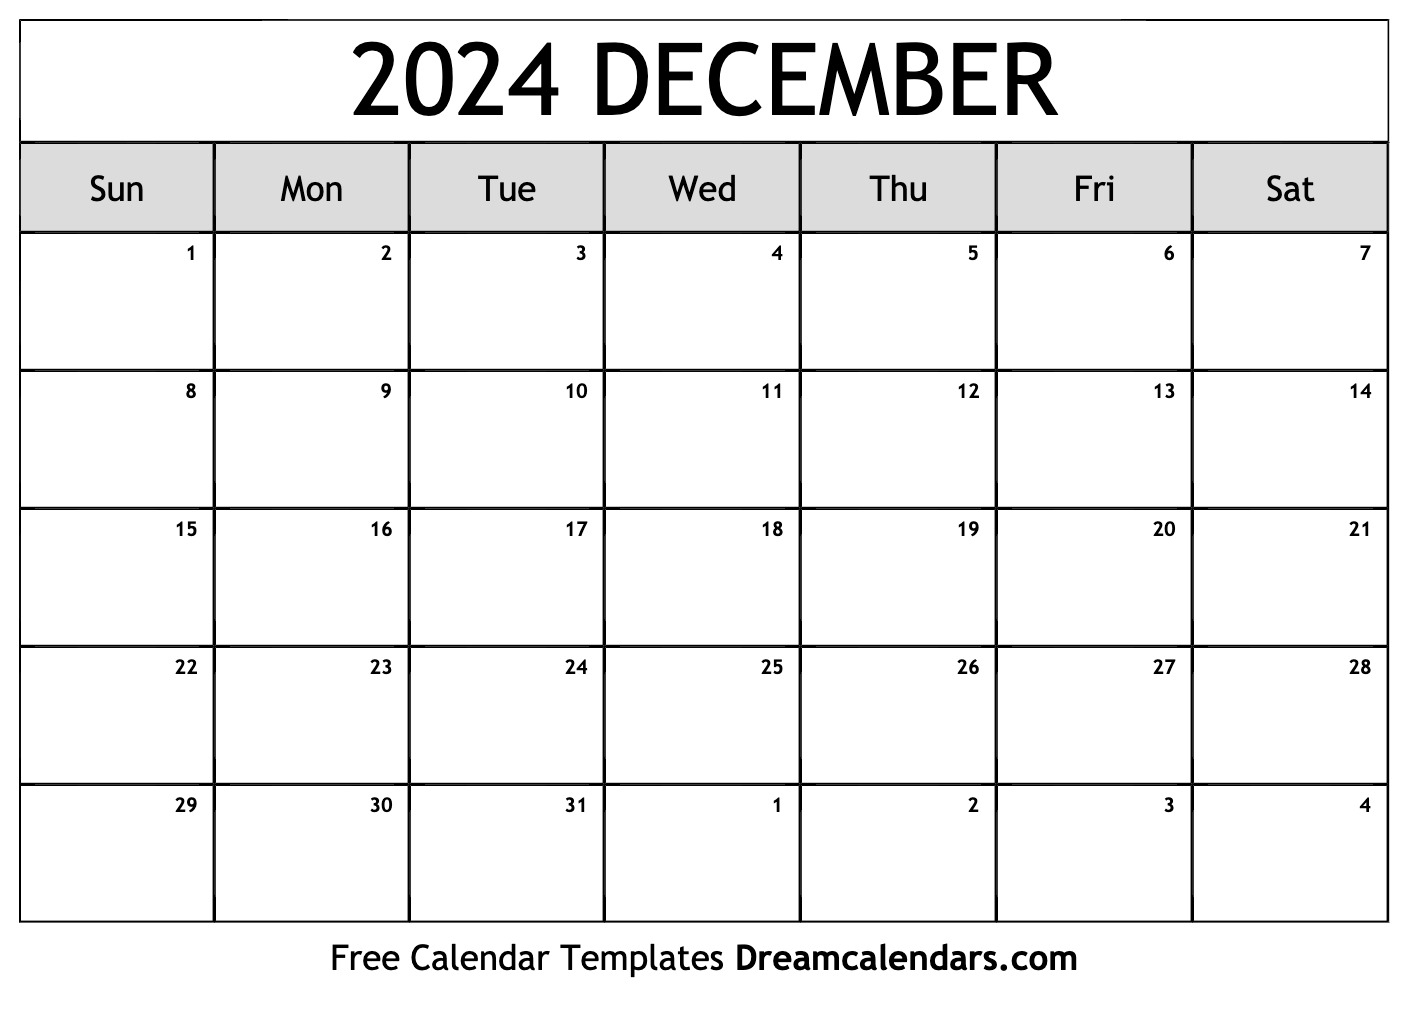 December 2024 Calendar | Free Blank Printable With Holidays for 2024 December Calendar Printable